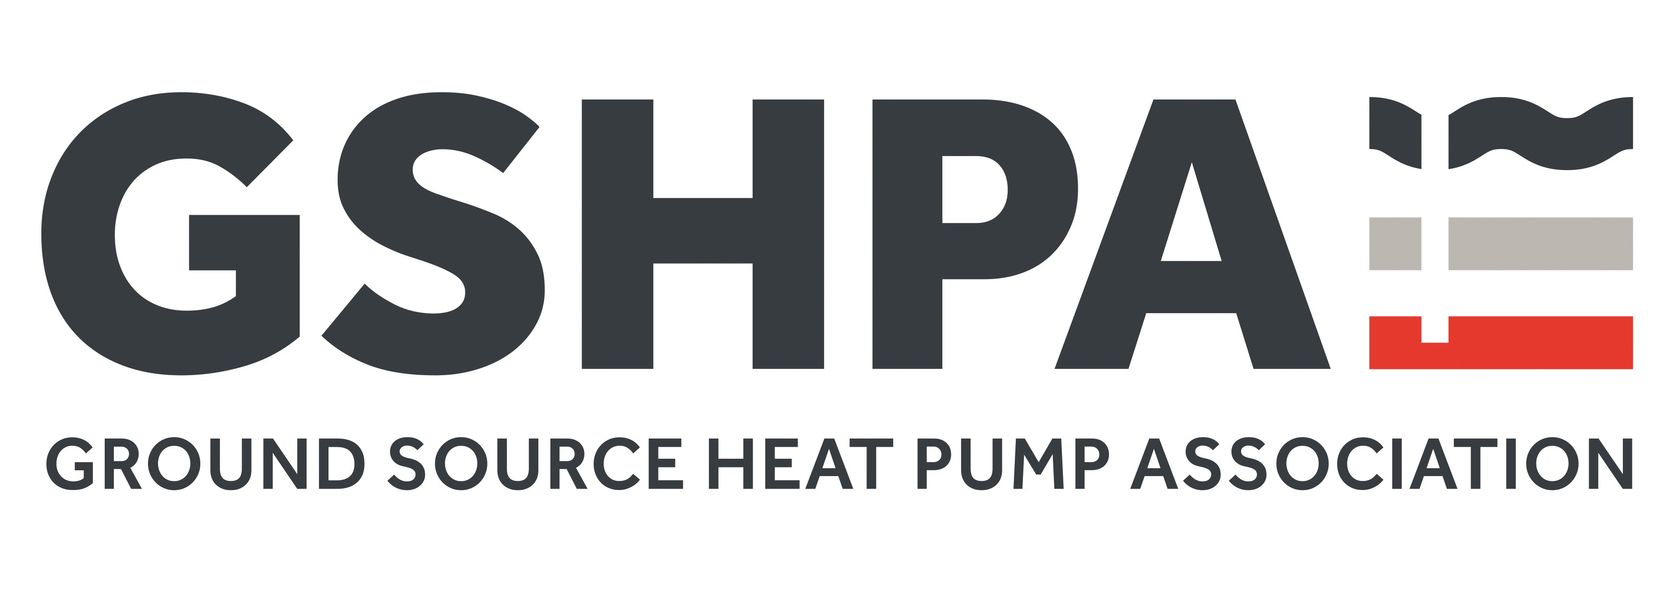 Ground Source Heat Pump Association